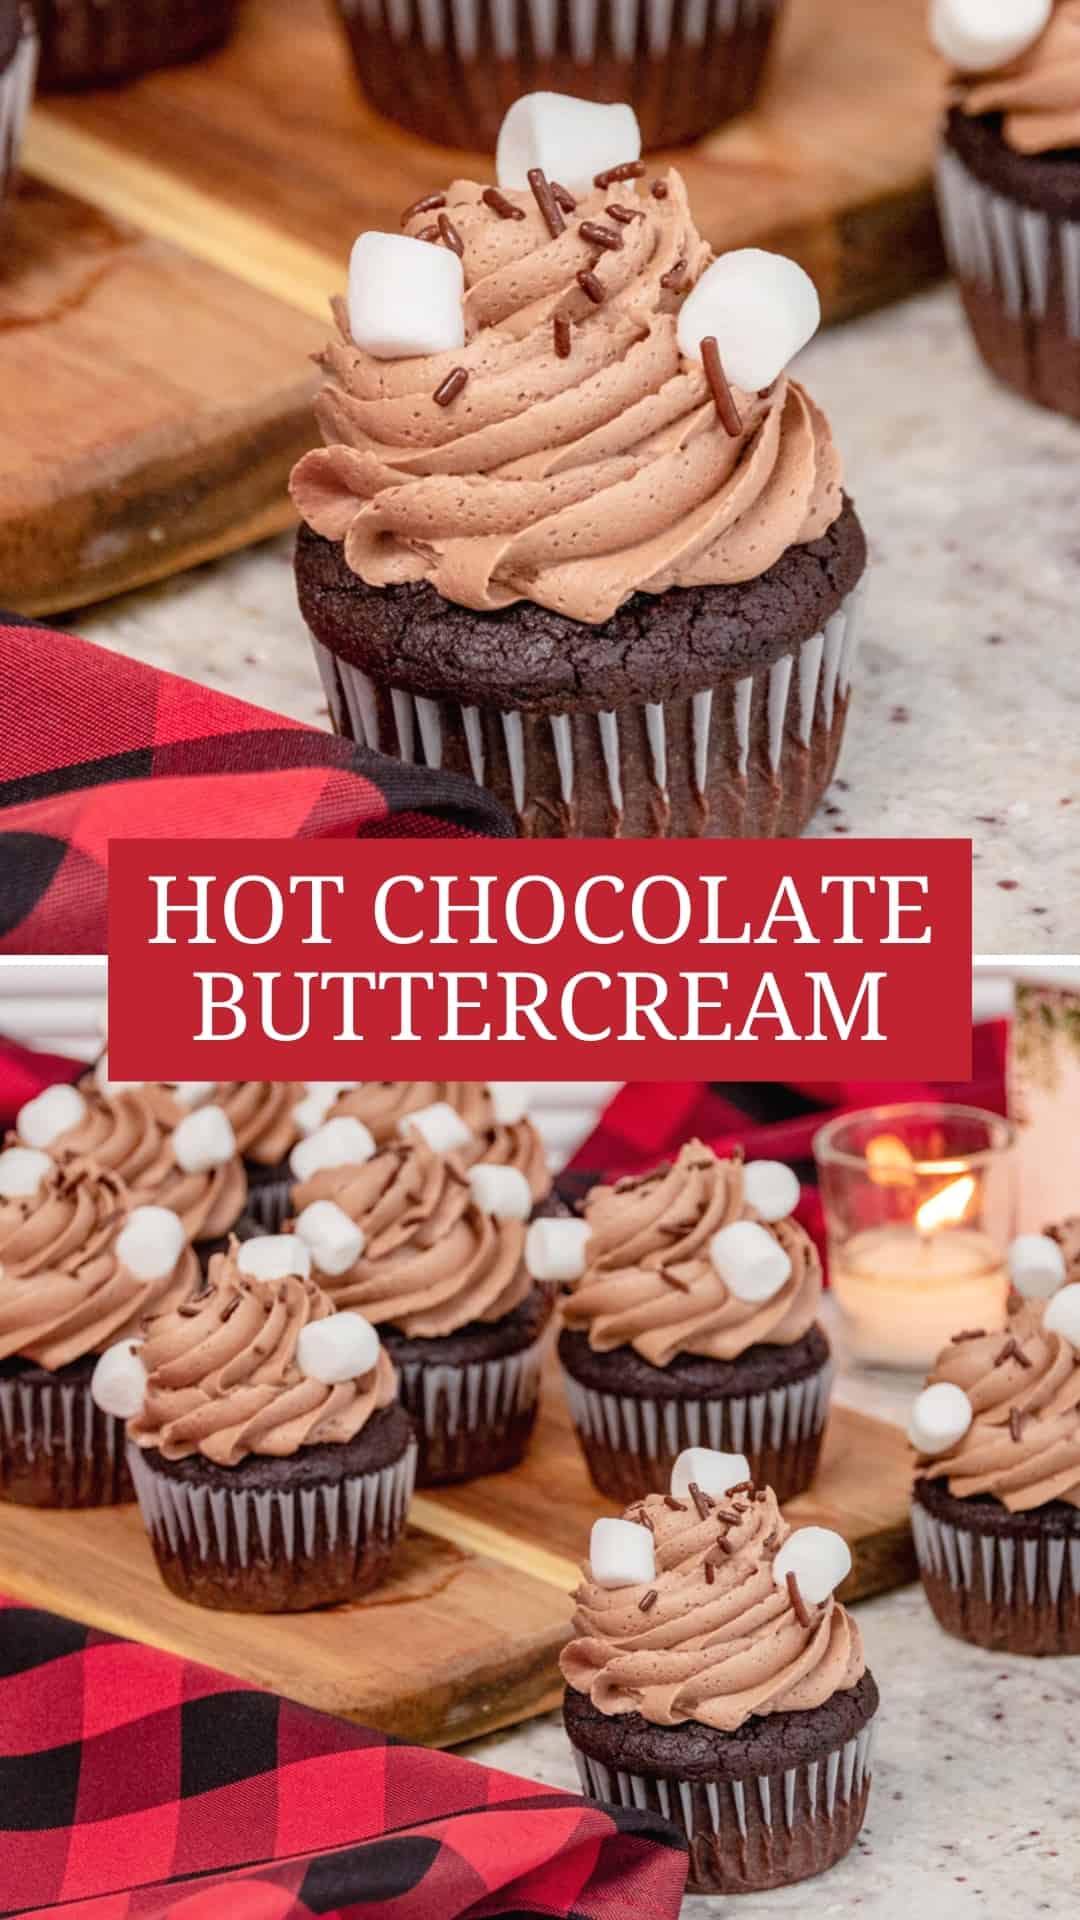 Hot cocoa buttercream pin graphic image.